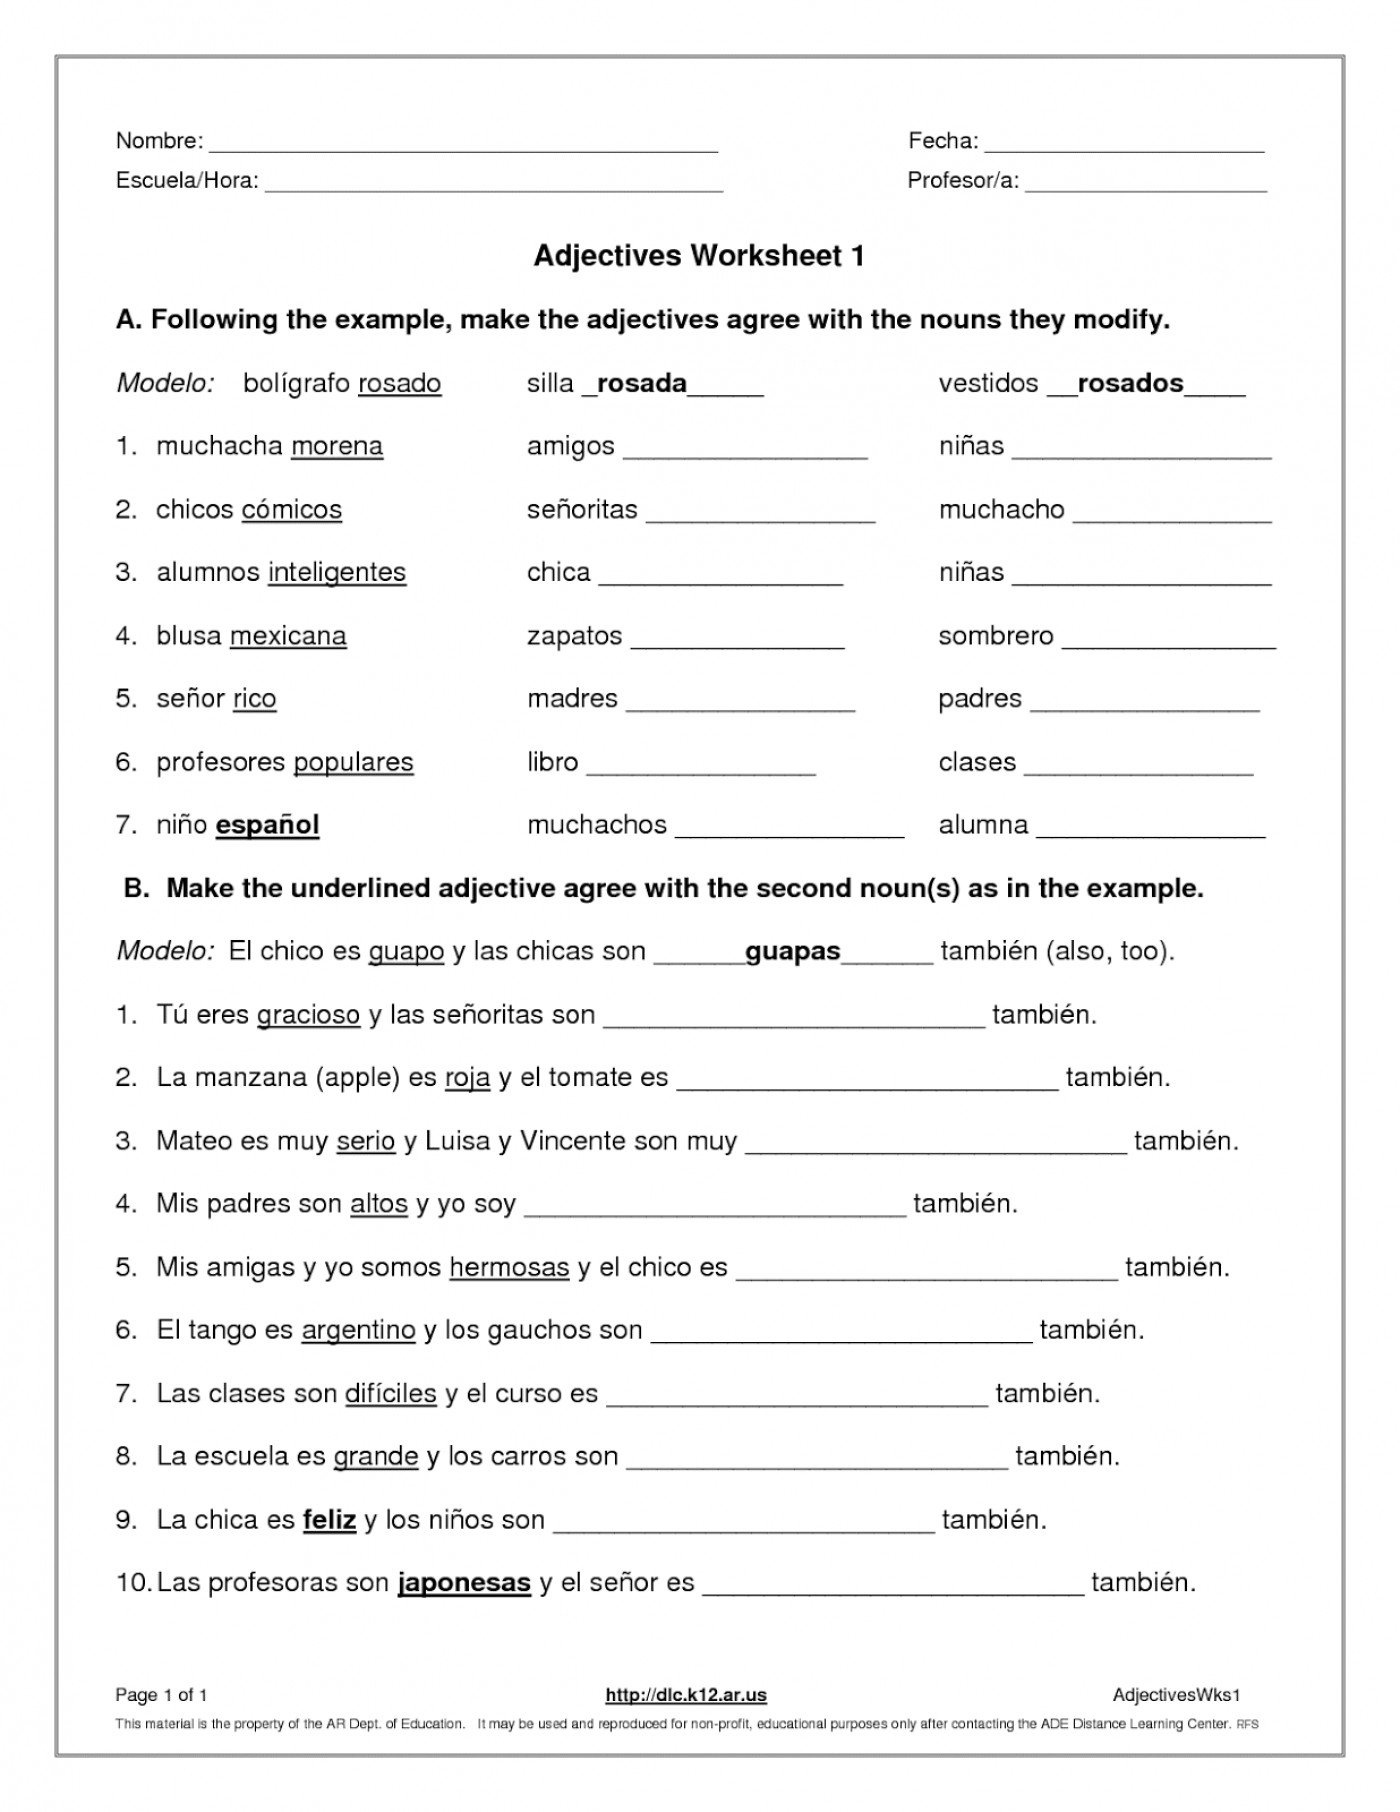 Identifying Adjectives Worksheet  Yooob Along With Adjectives Worksheet 3 Spanish Answers